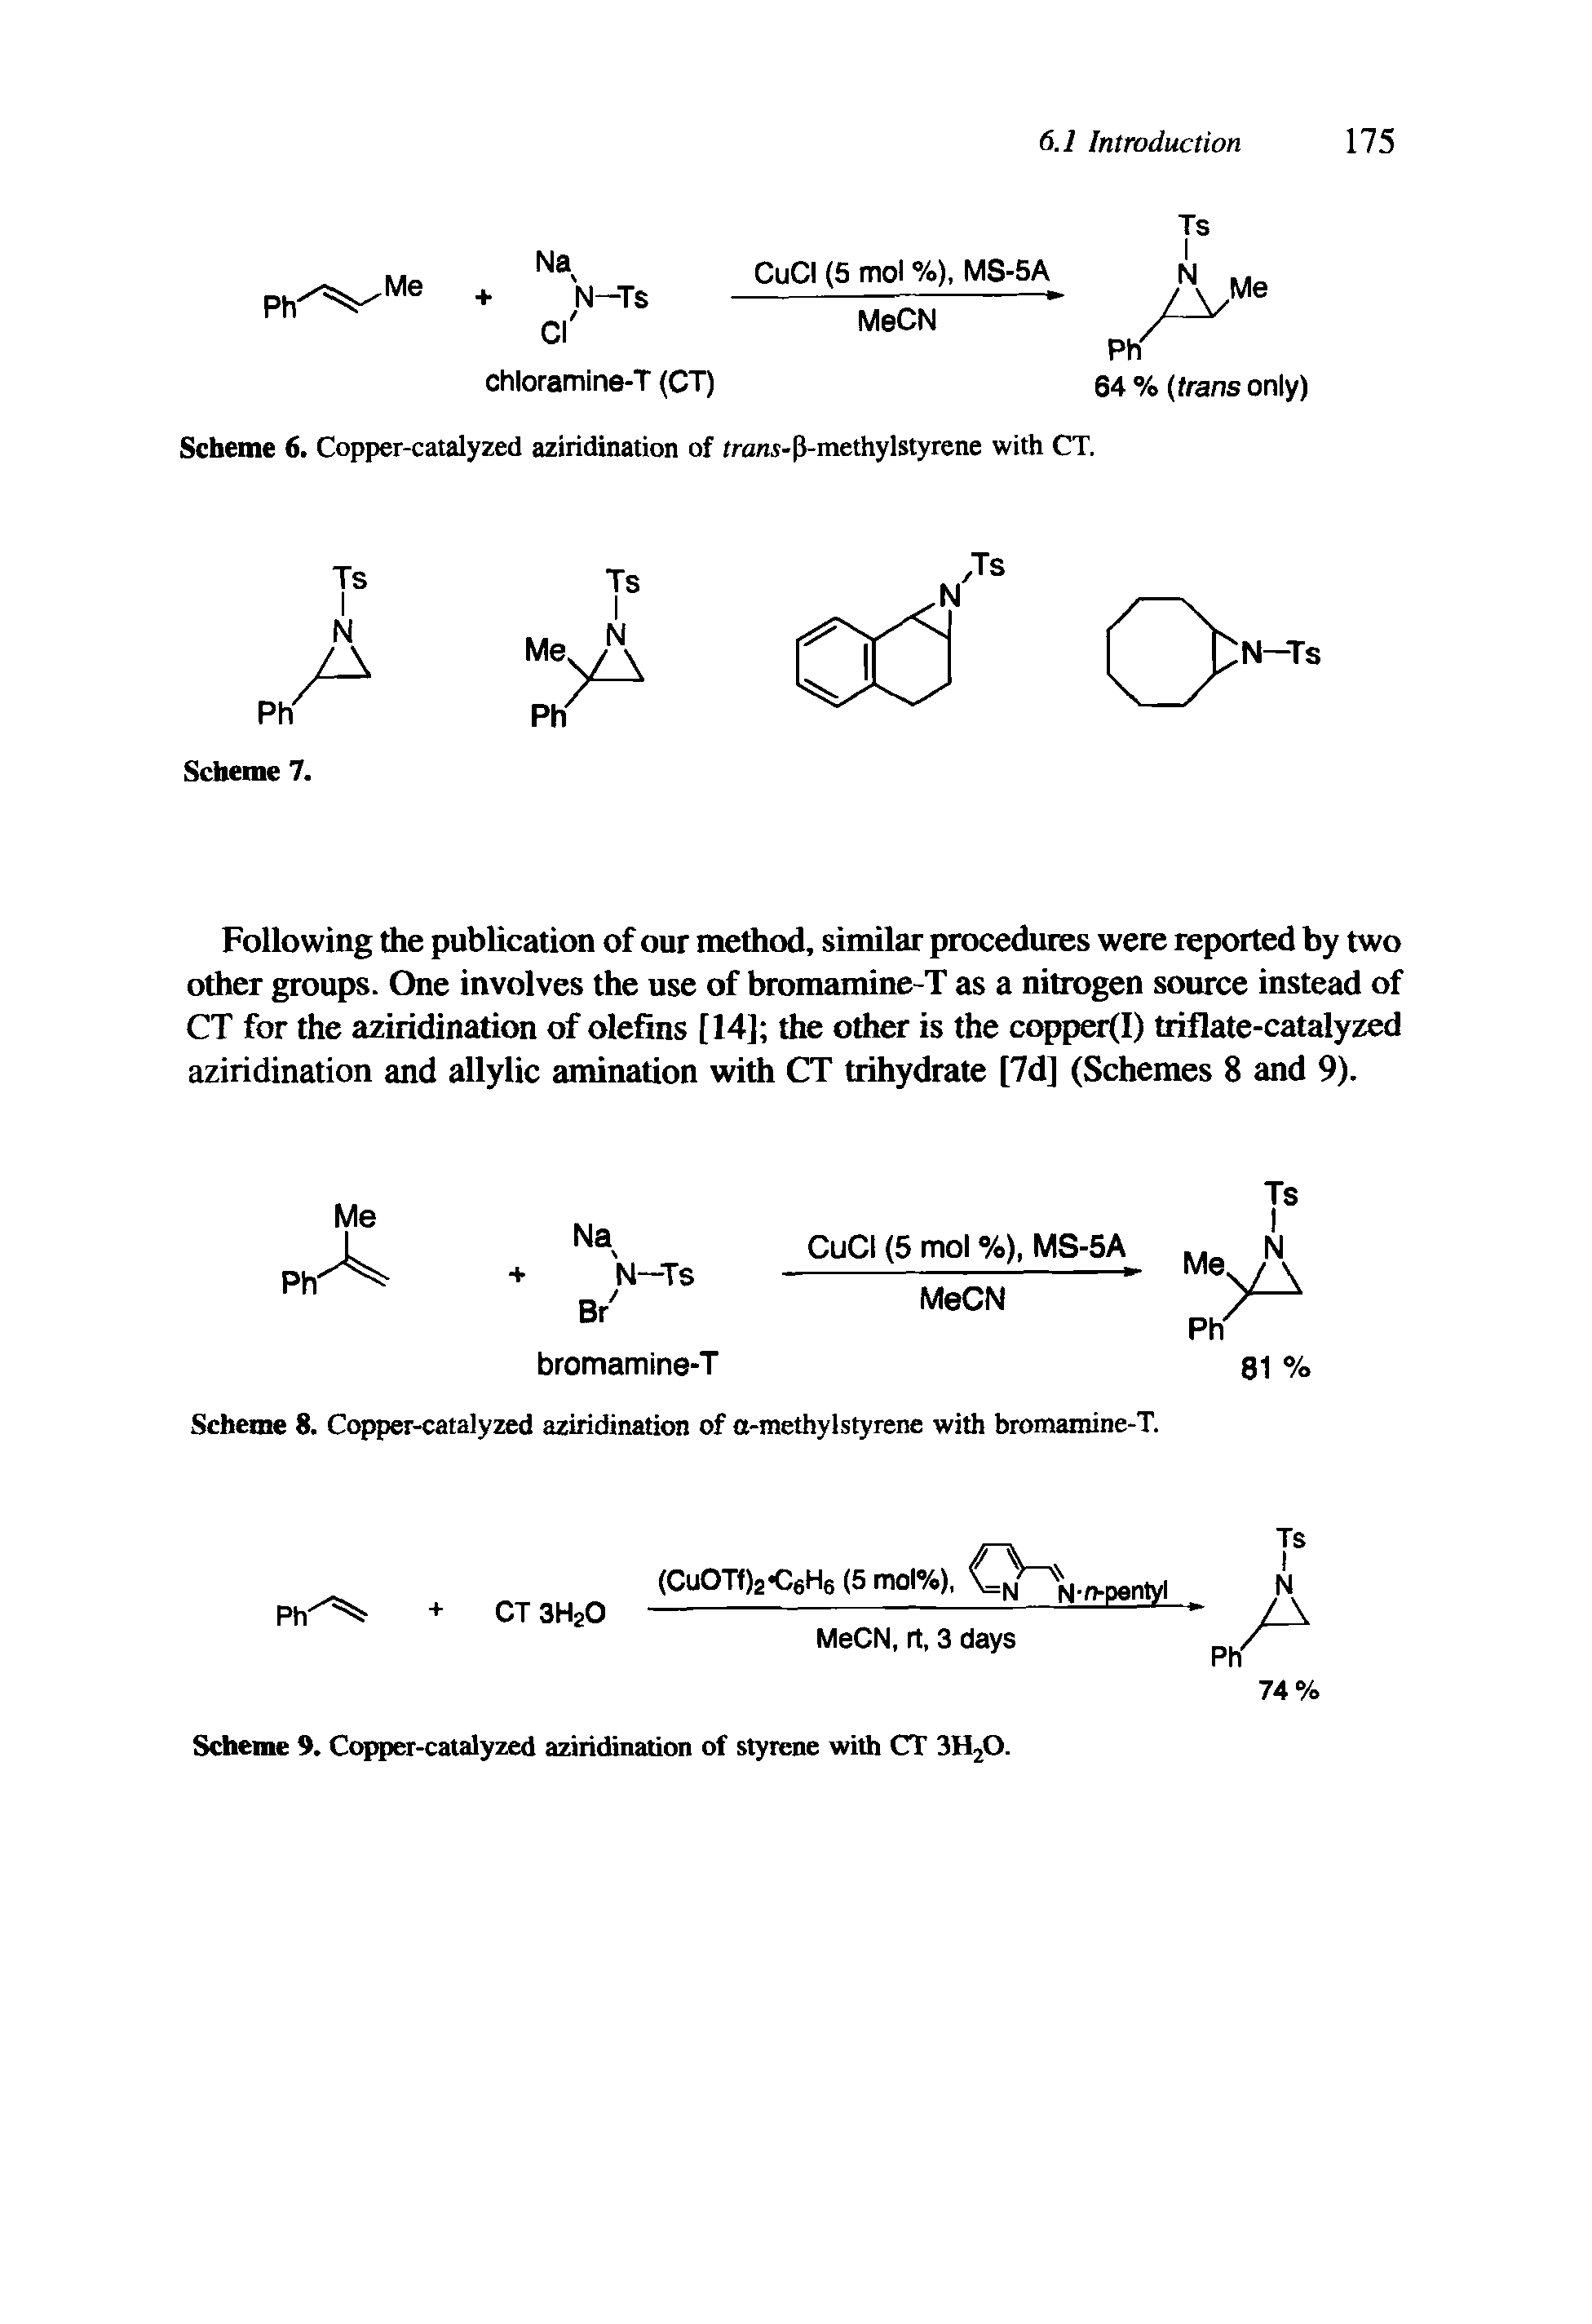 Scheme 9. Copper-catalyzed aziridination of styrene with CT 3H20.